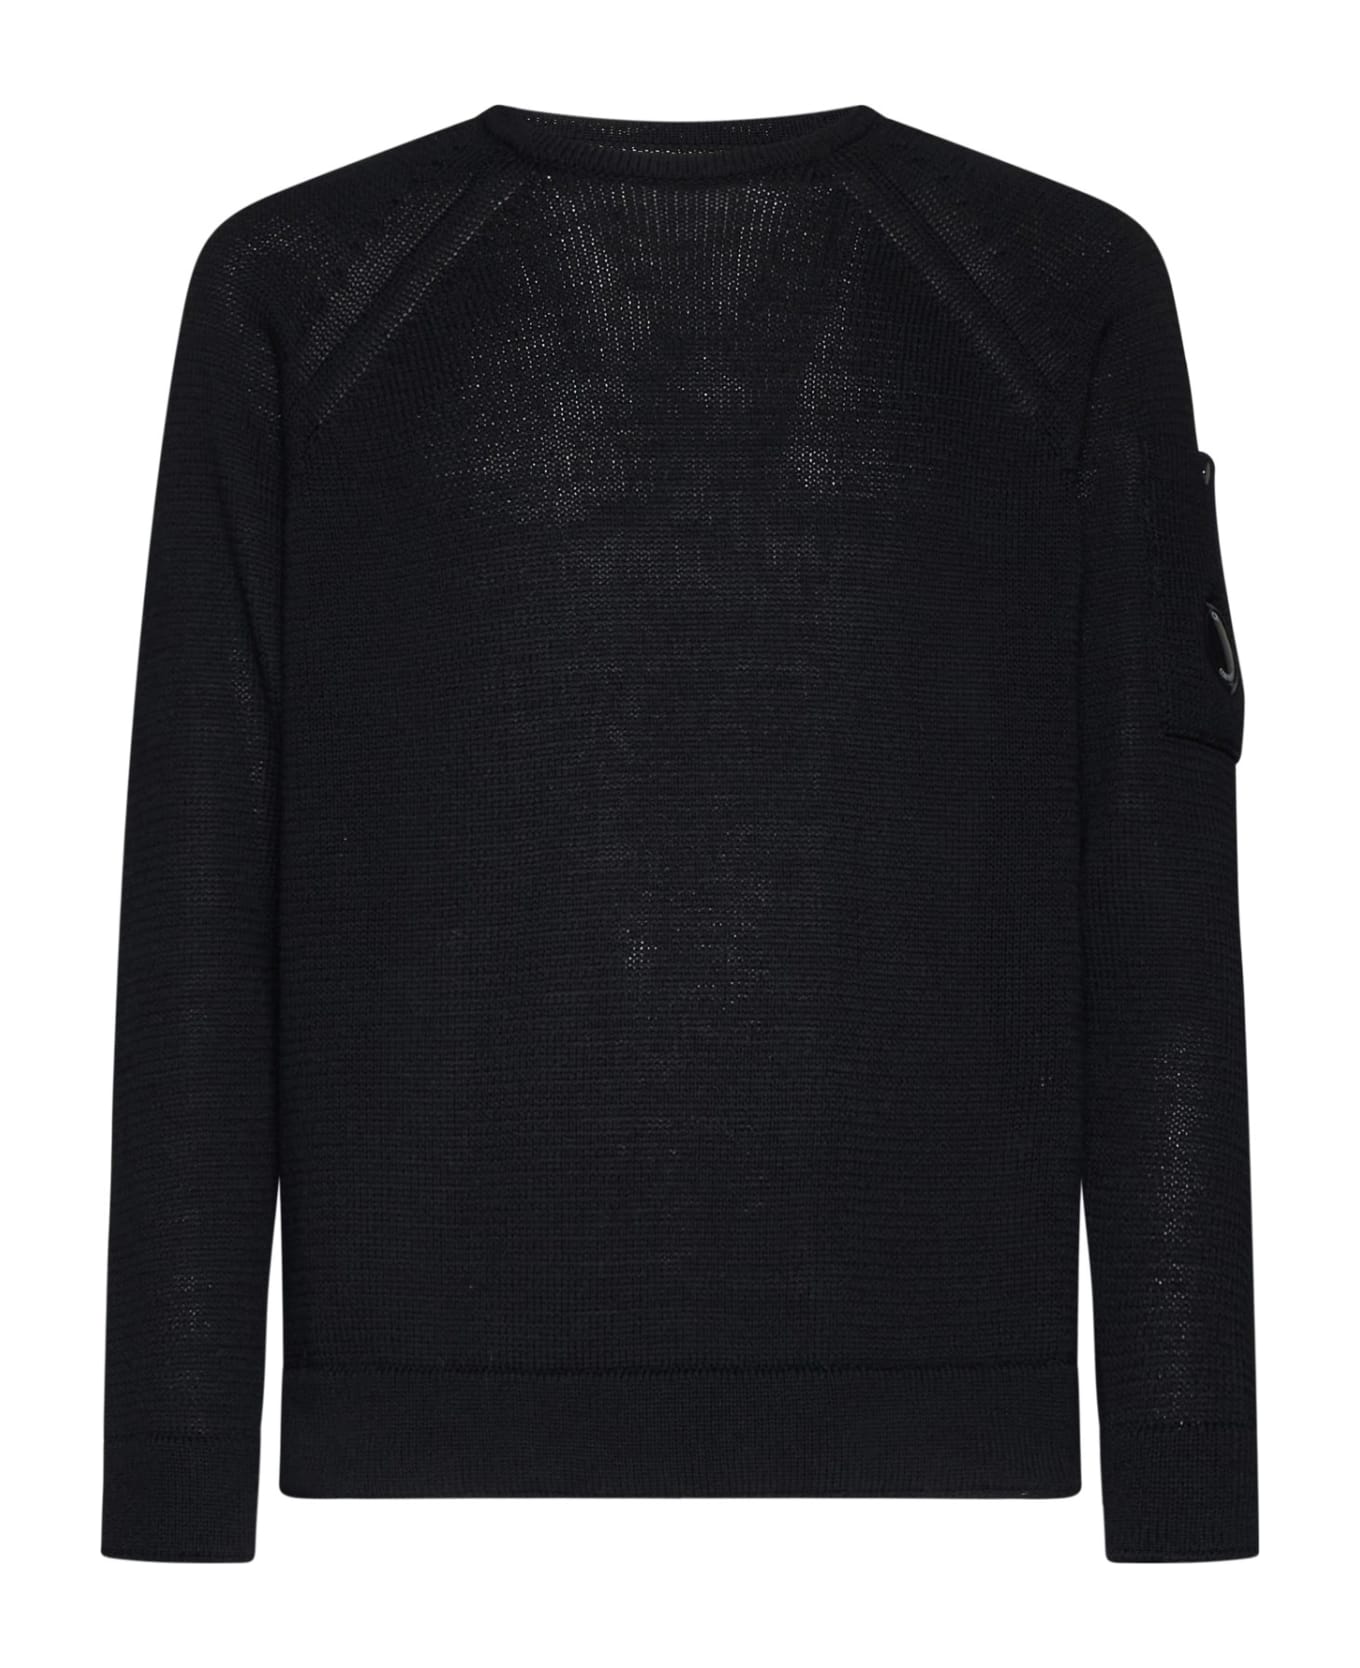 C.P. Company Sweater - Black ニットウェア